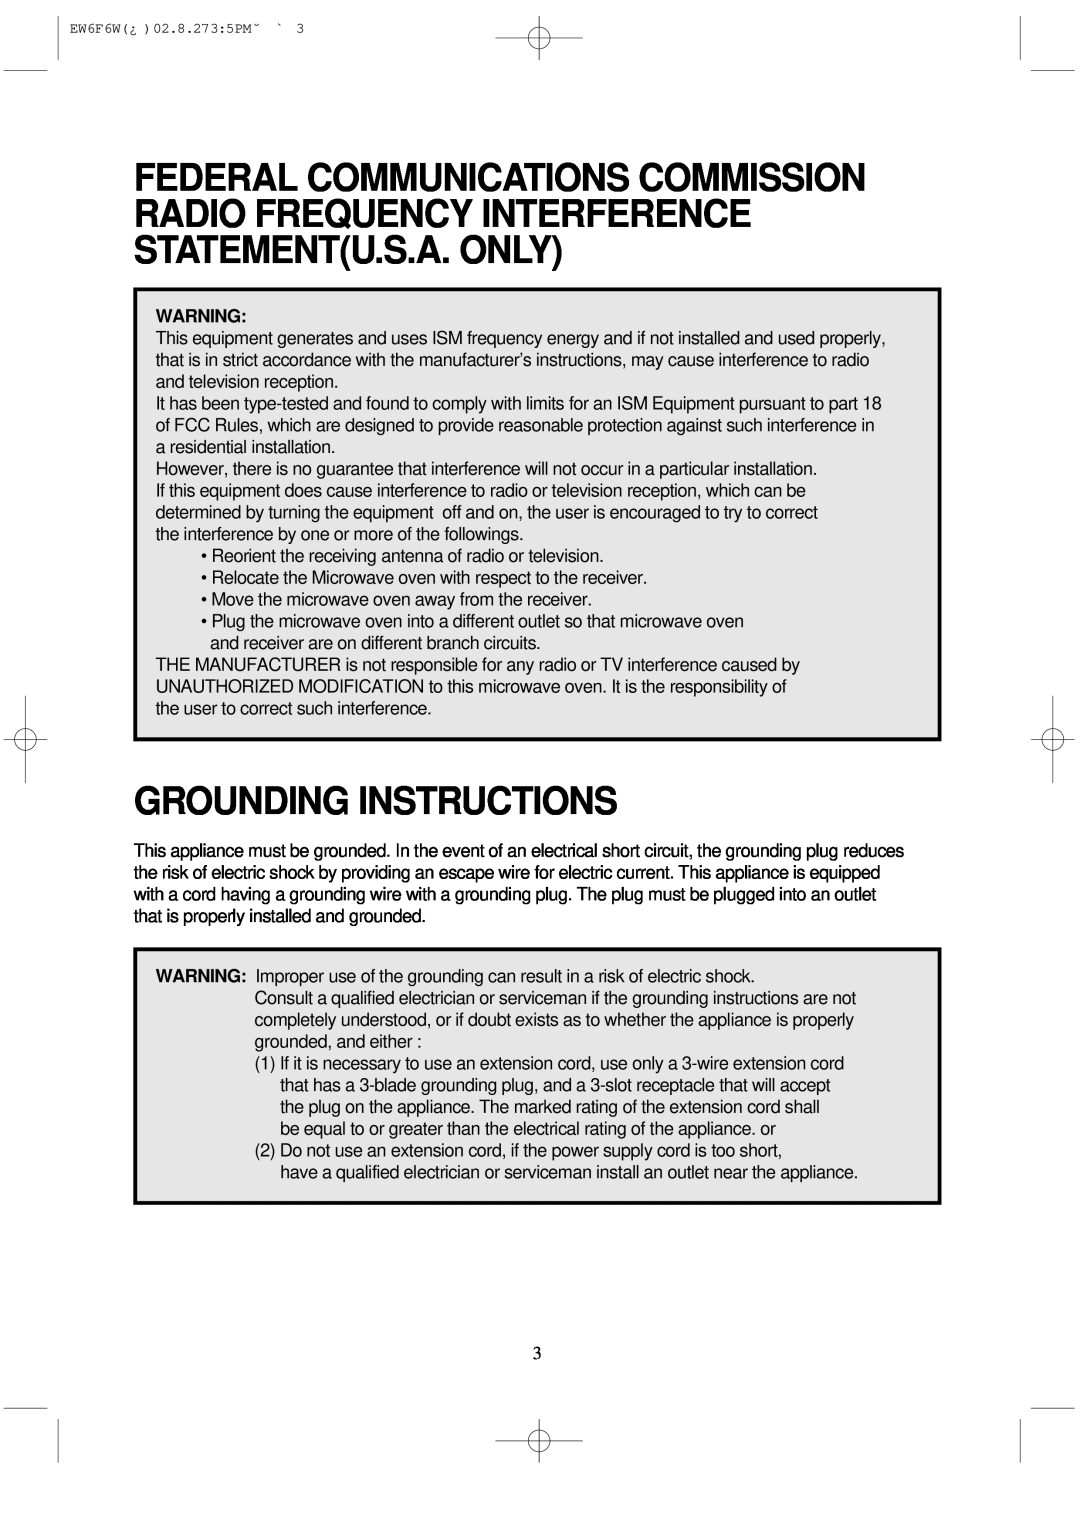 Daewoo EW6F6W instruction manual Grounding Instructions 